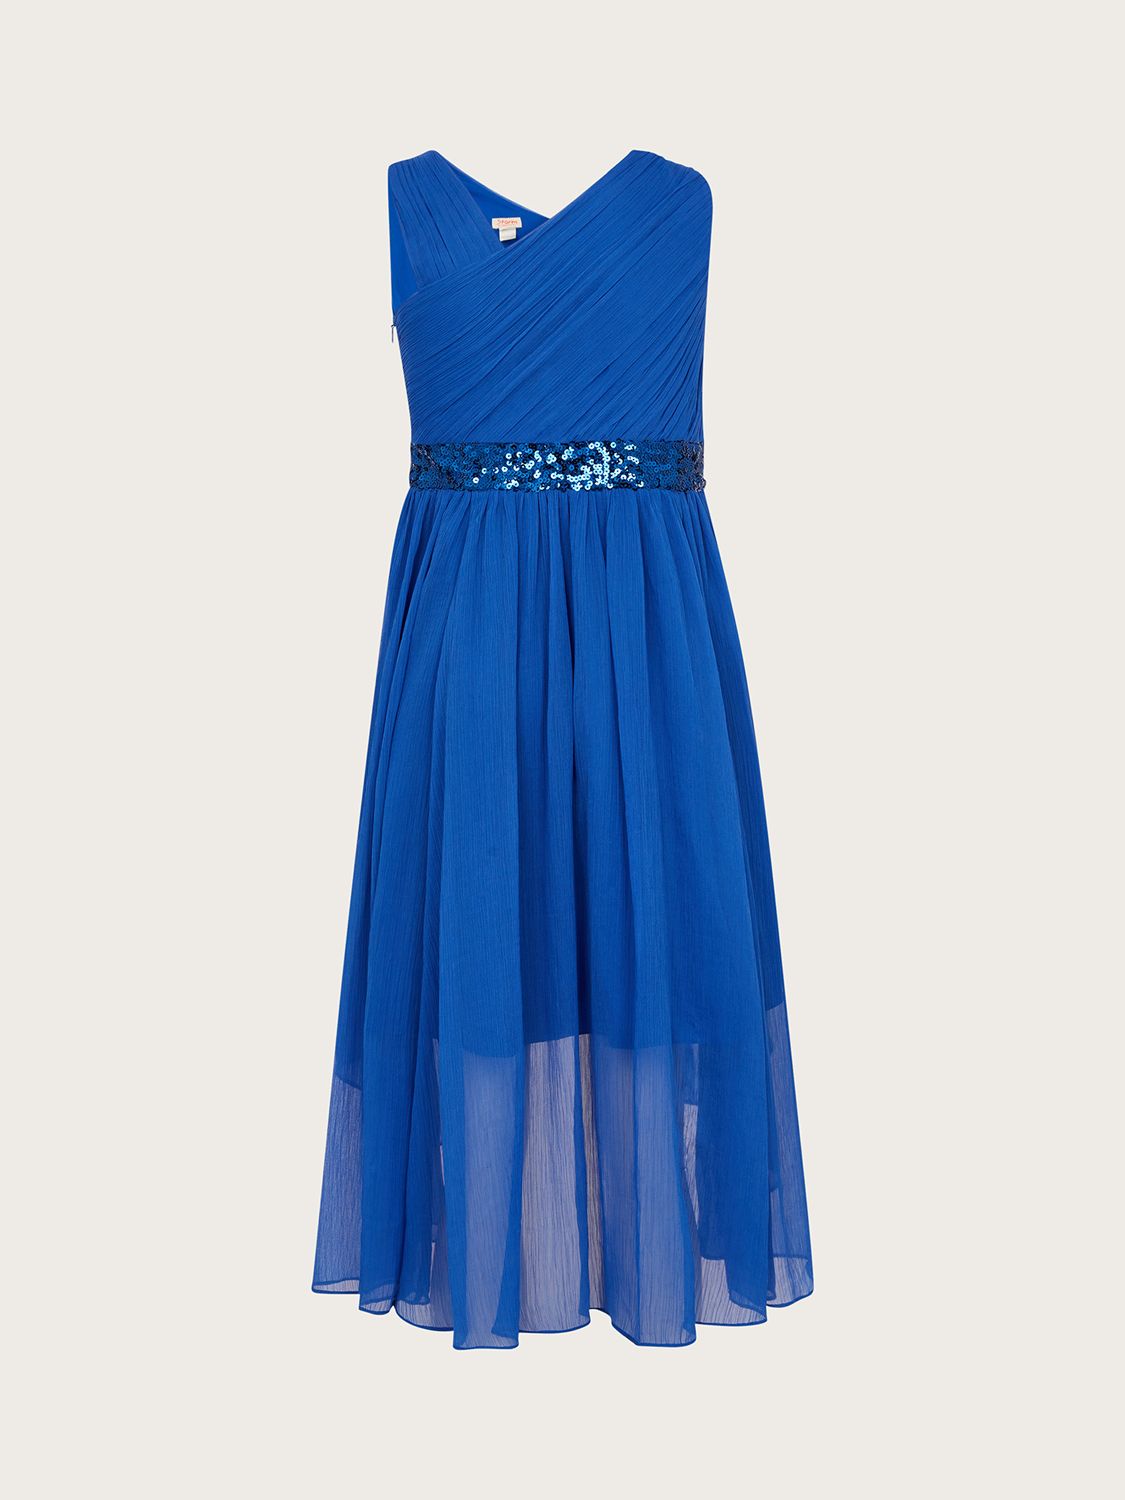 Buy Monsoon Kids' Abigail Asymmetric Party Dress, Blue Online at johnlewis.com